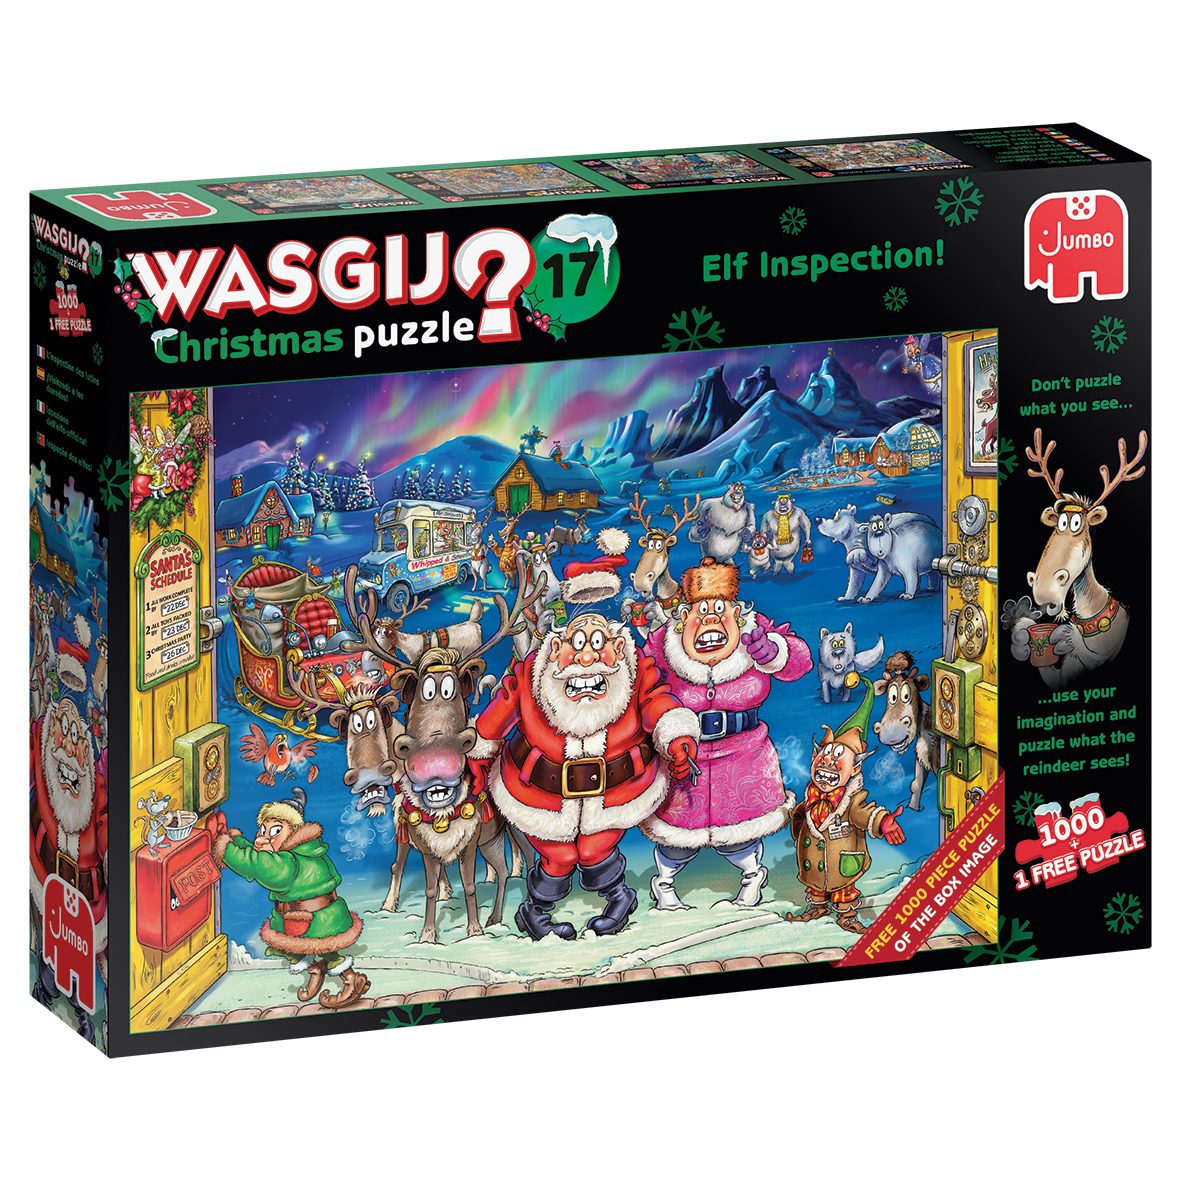 Wasgij - Puzzle Inspection!, Puzzleteile Christmas Spiele Jumbo 17 Elf 25003 1000